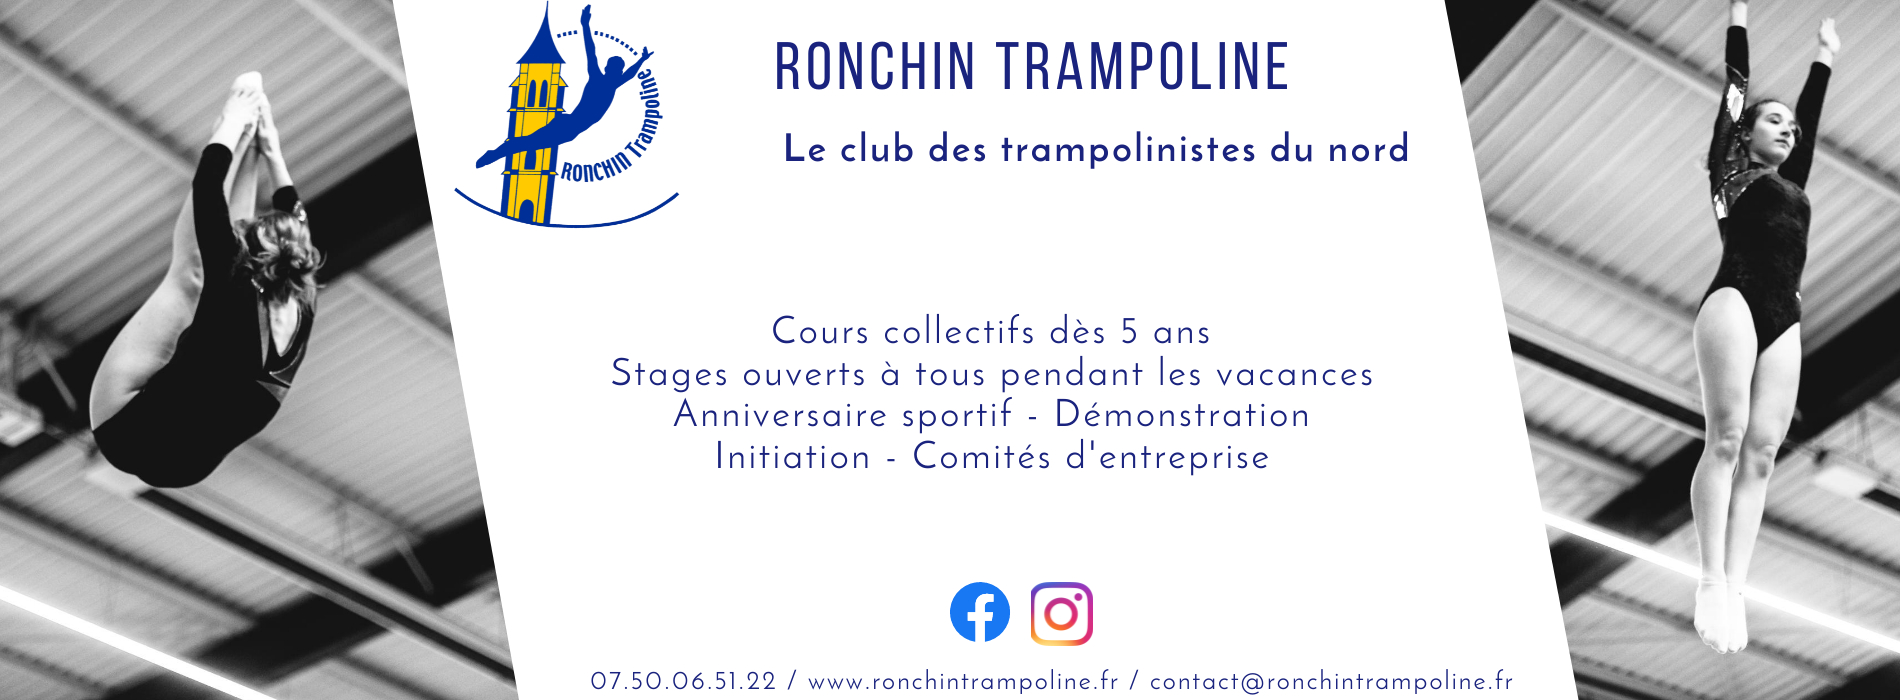 Ronchin Trampoline